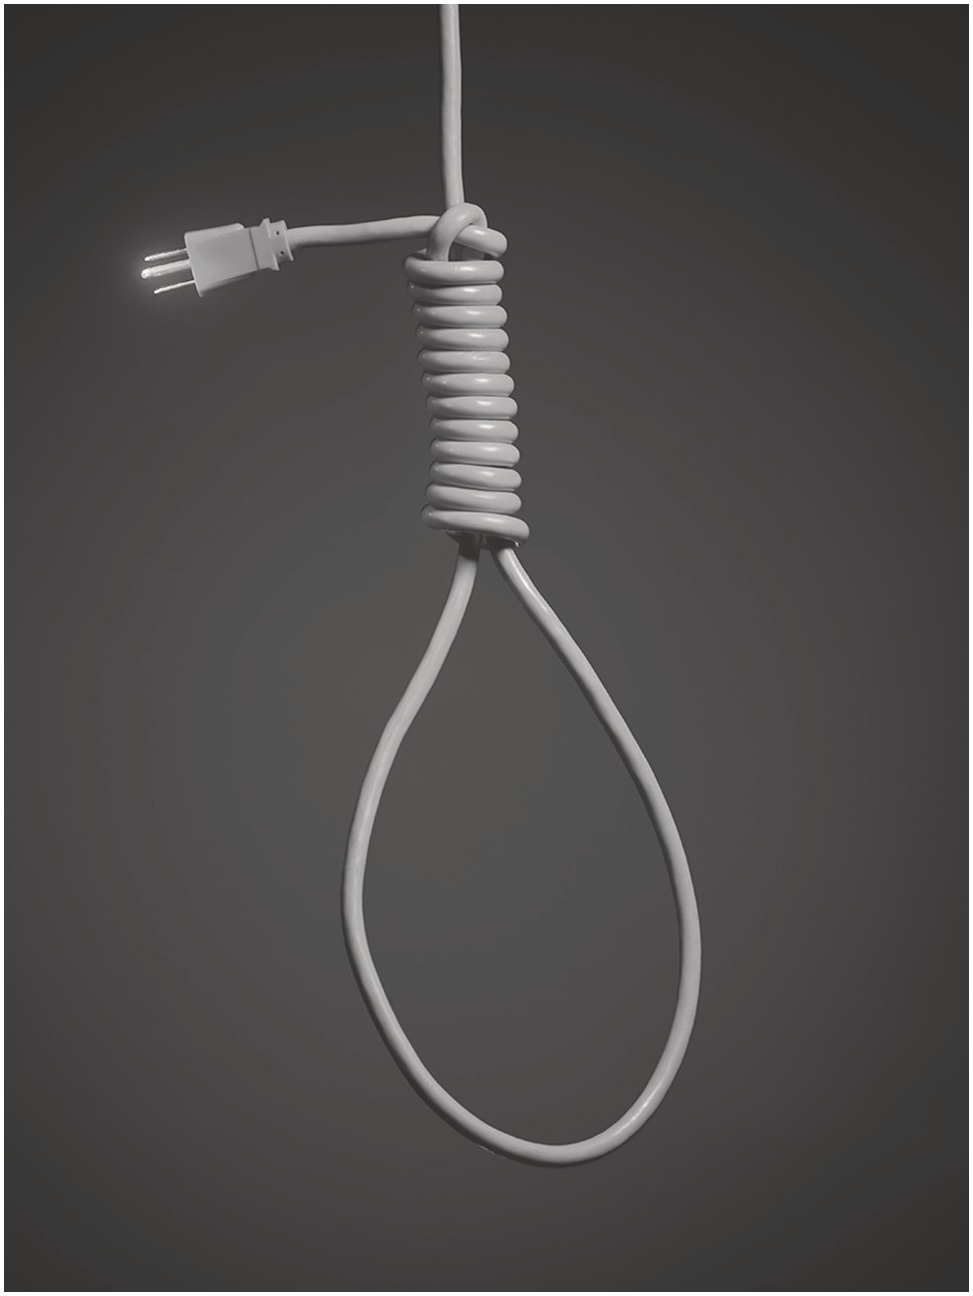 death penalty violates 8th amendment essay